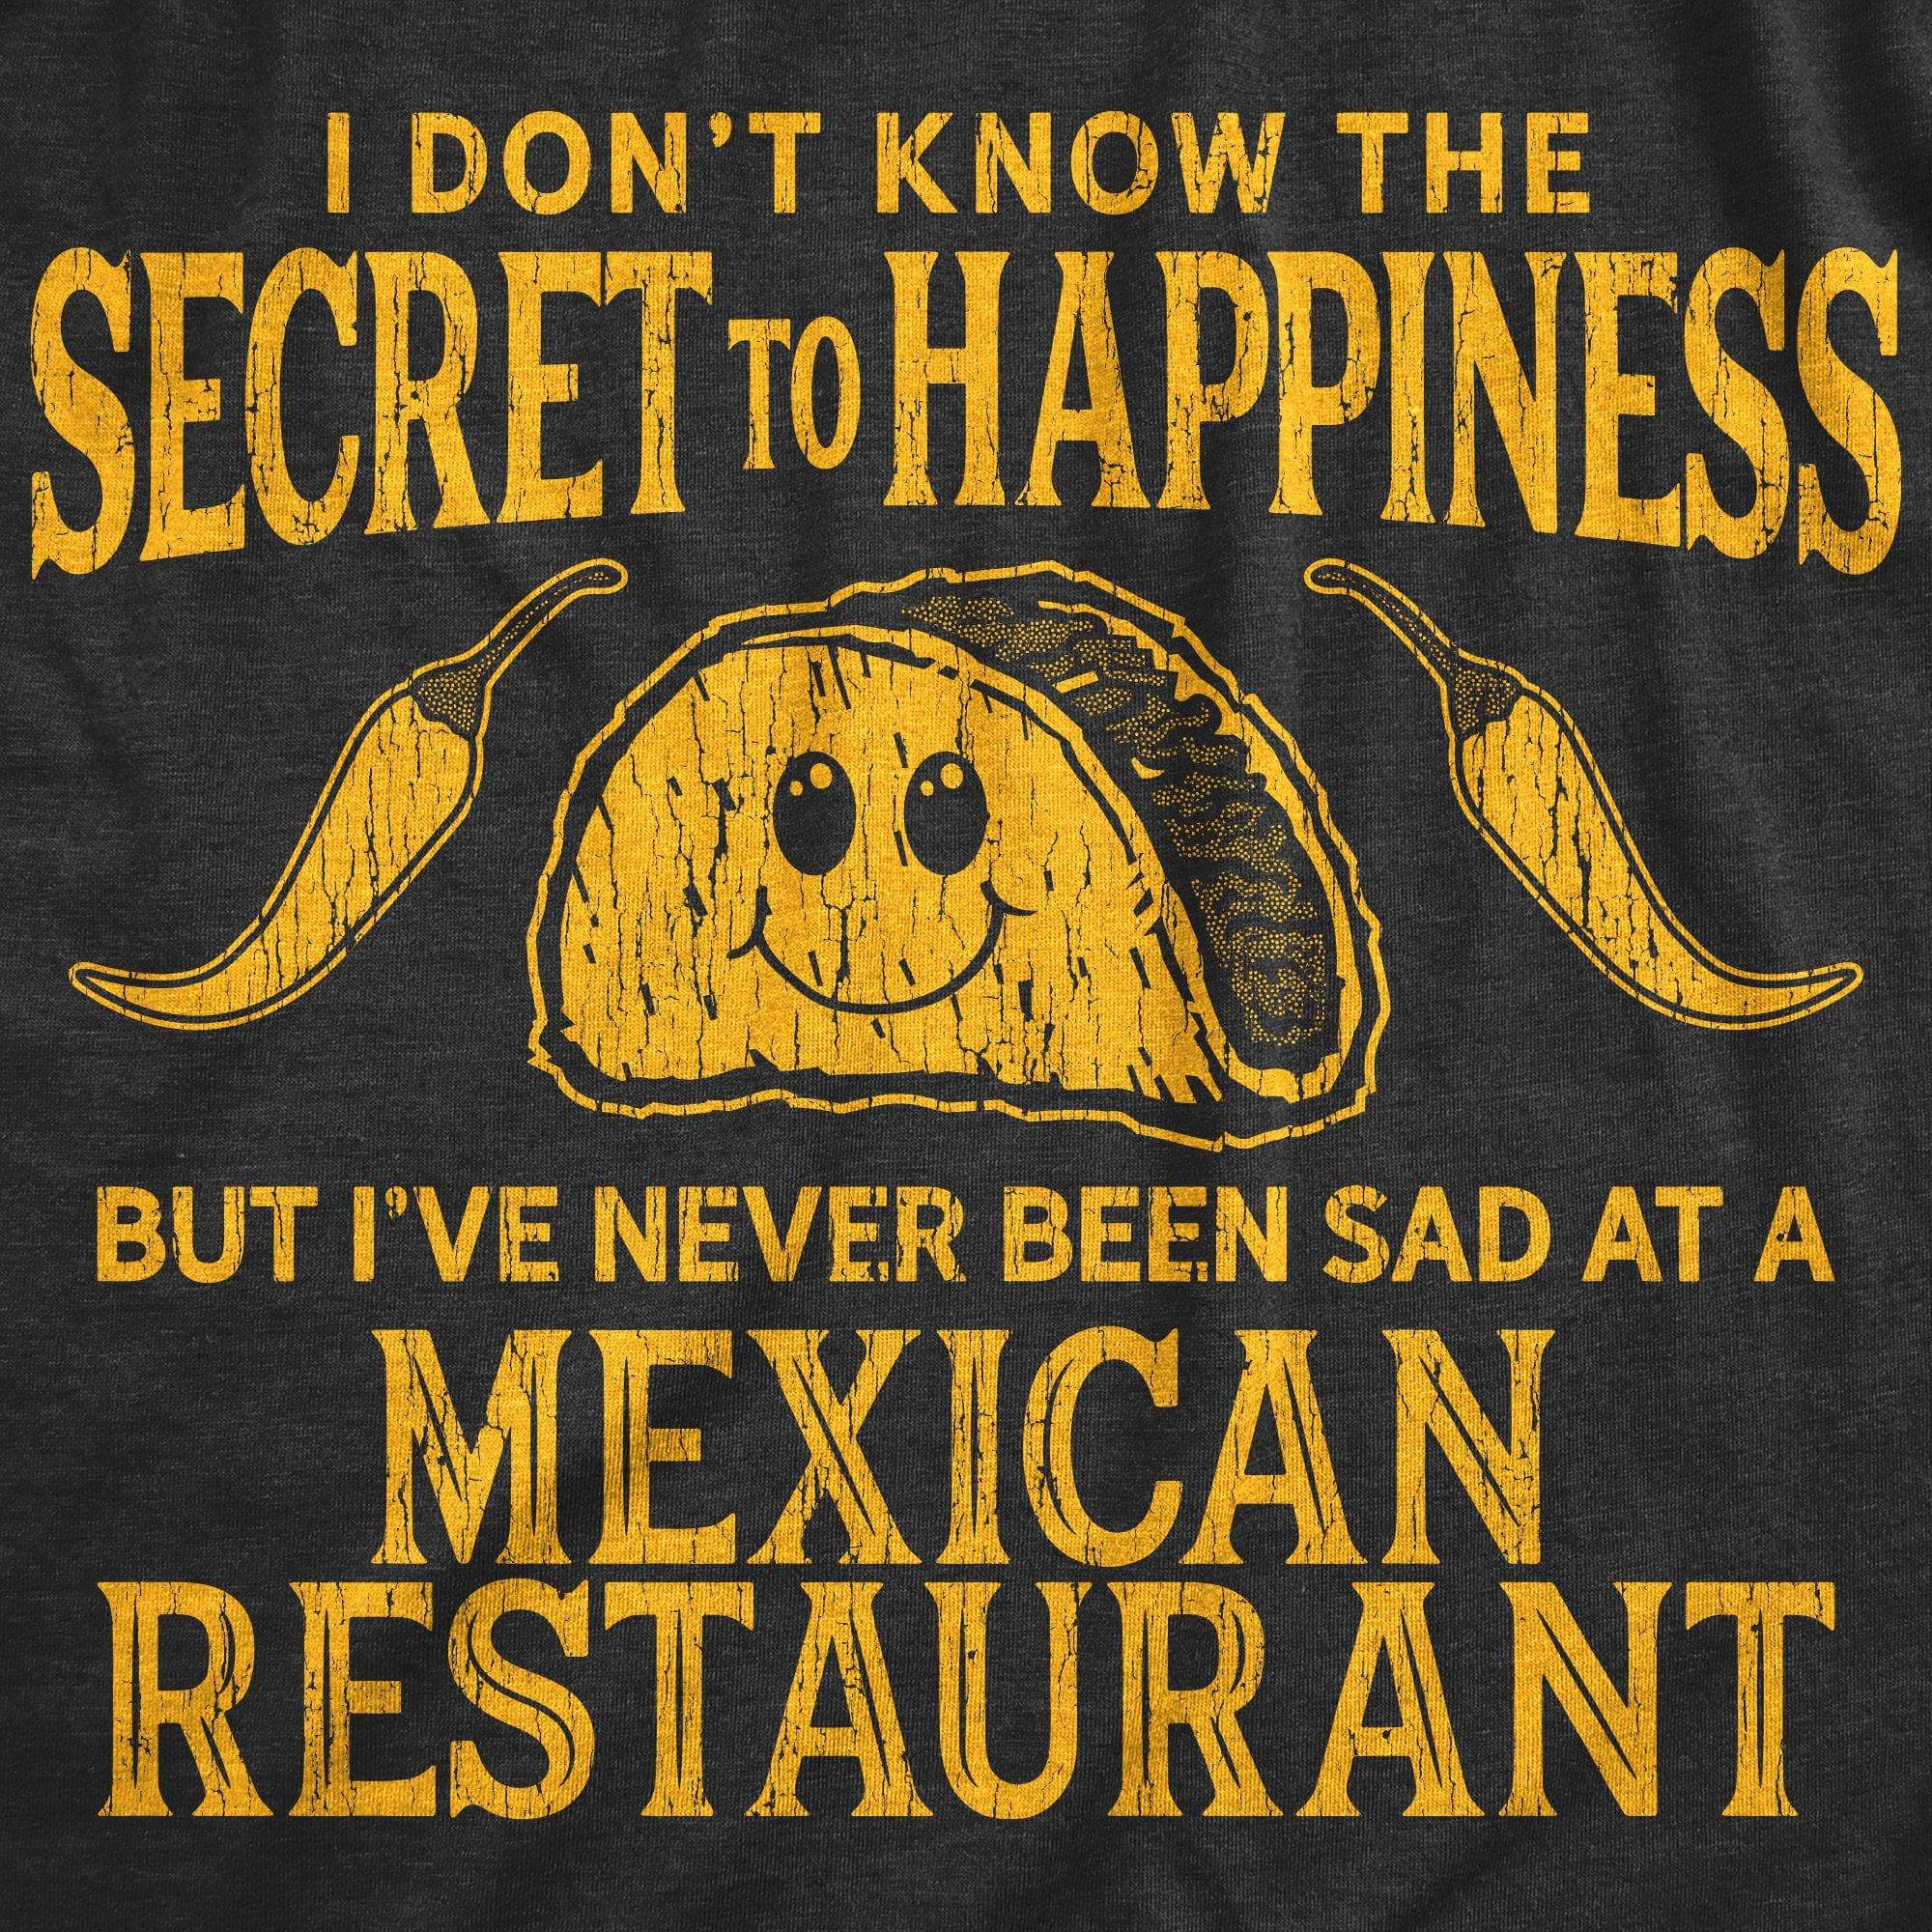 Sad At A Mexican Restaurant Women's Tshirt - Crazy Dog T-Shirts